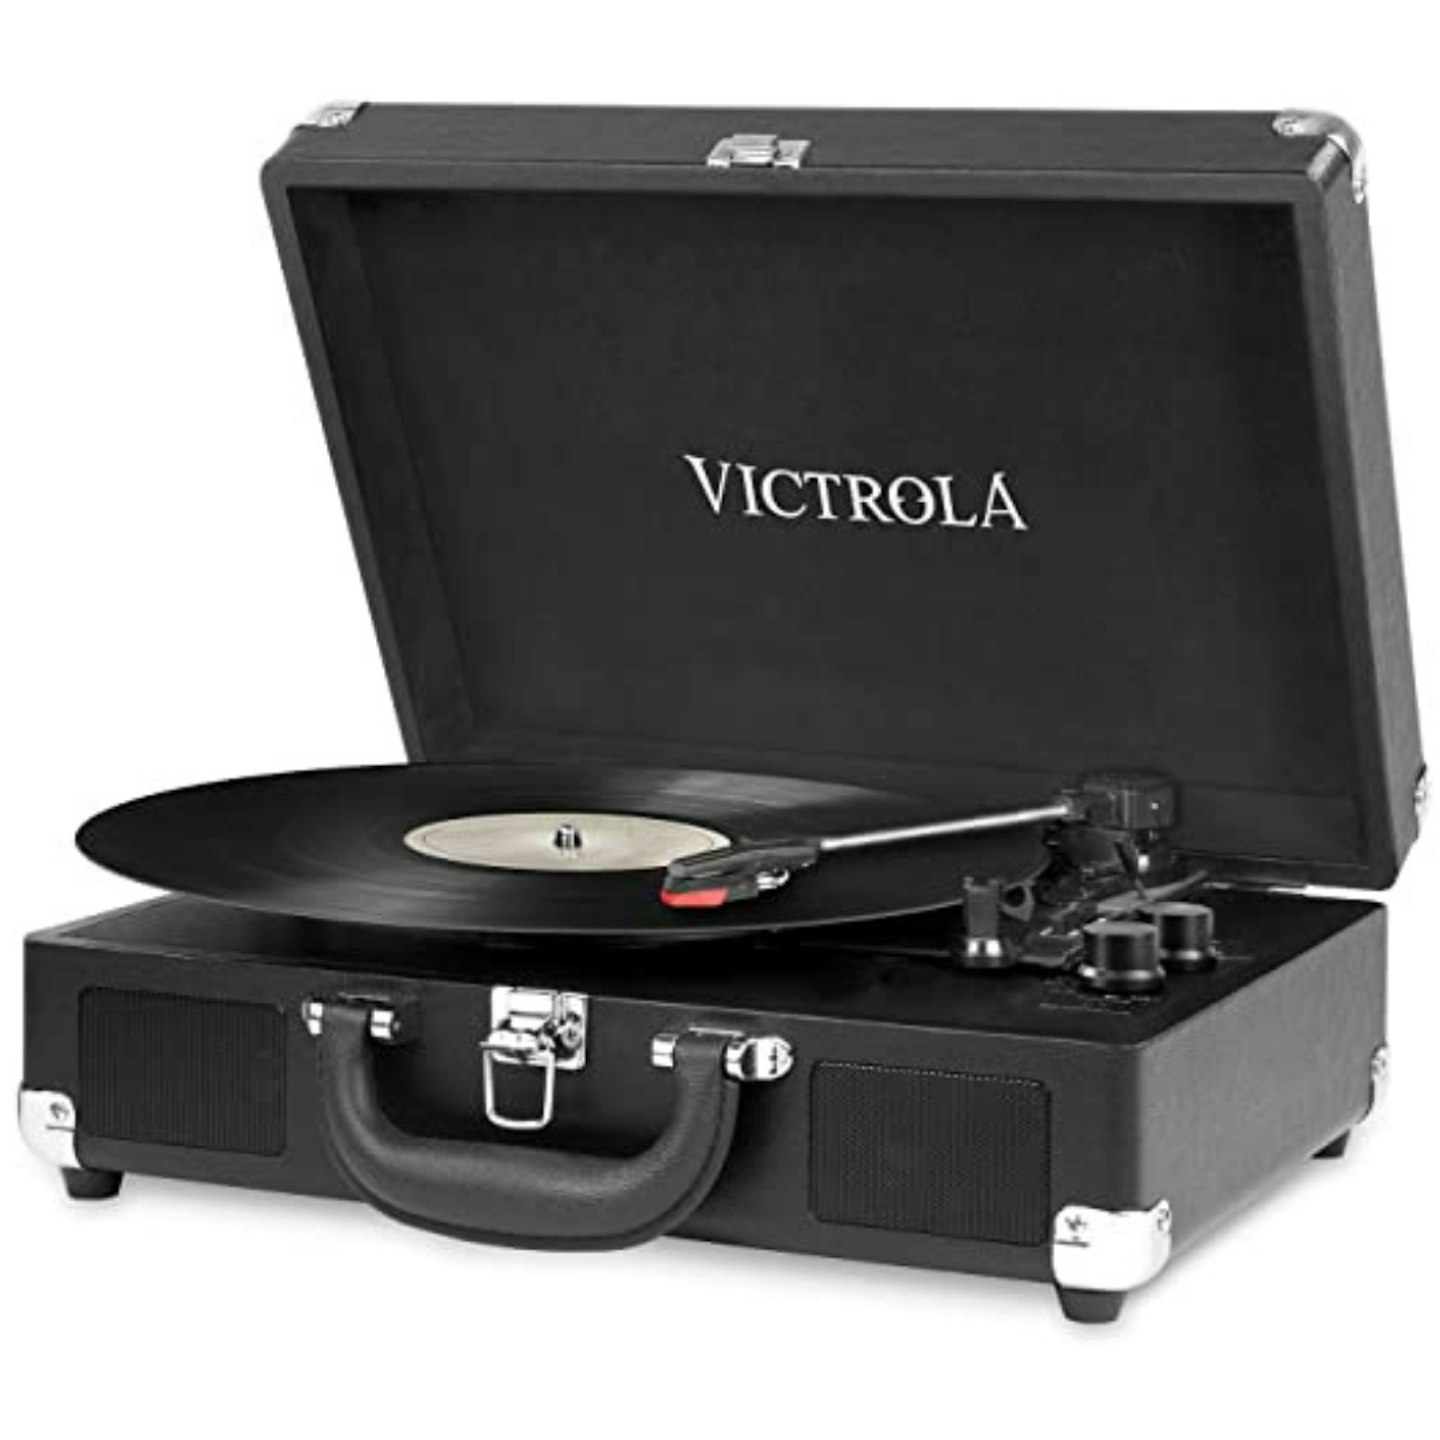 Victrola Vintage portable record player